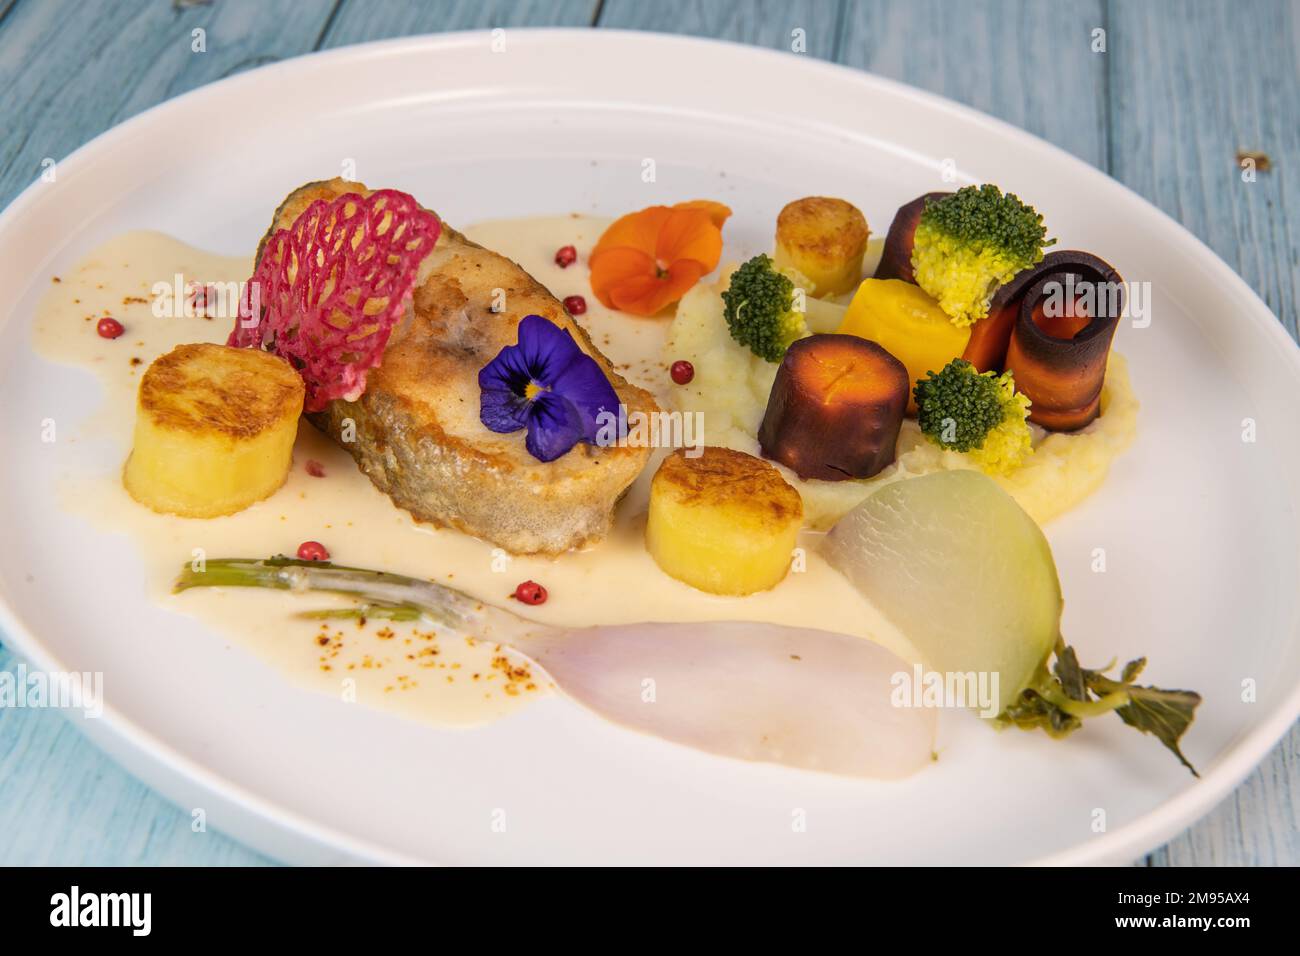 Recipe of cod steak, mashed potatoes and its farandole of vegetables, parsnip, turnip, broccoli, candied potato Stock Photo